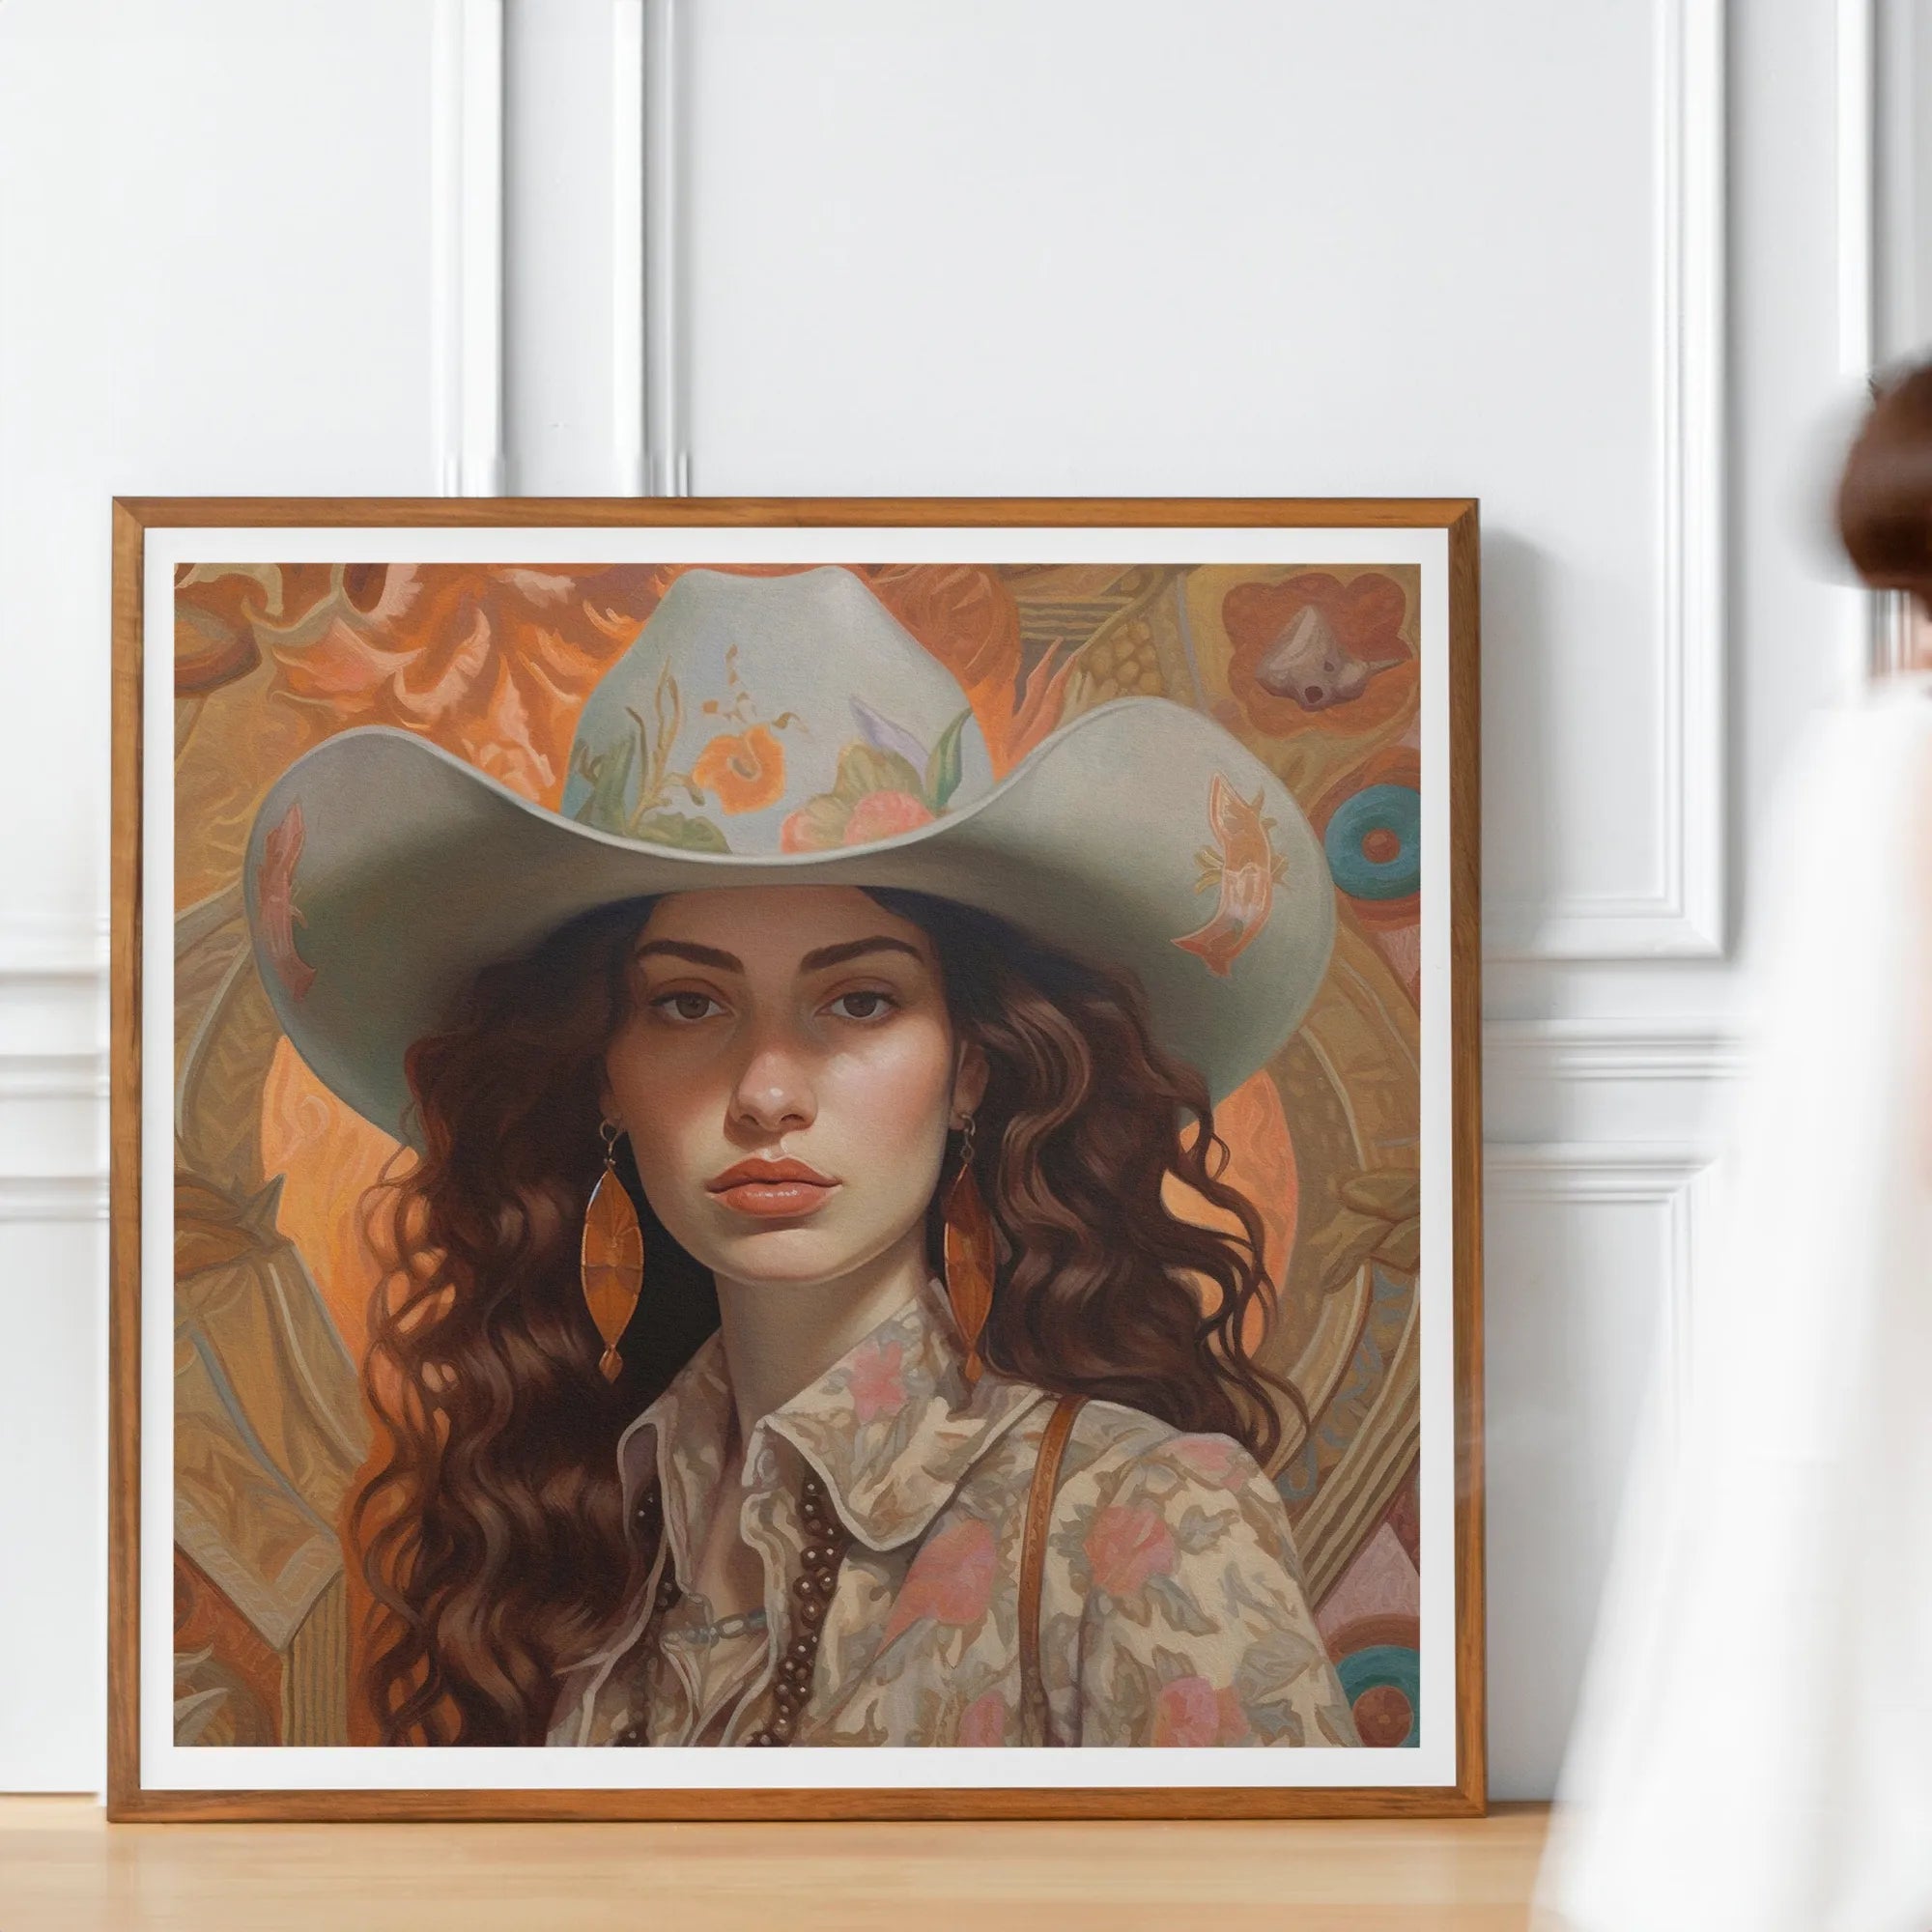 Nina - Lesbian Cowgirl Art Print - Wlw Jewish Sapphic Femme - 40’x40’ - Posters Prints & Visual Artwork - Aesthetic Art